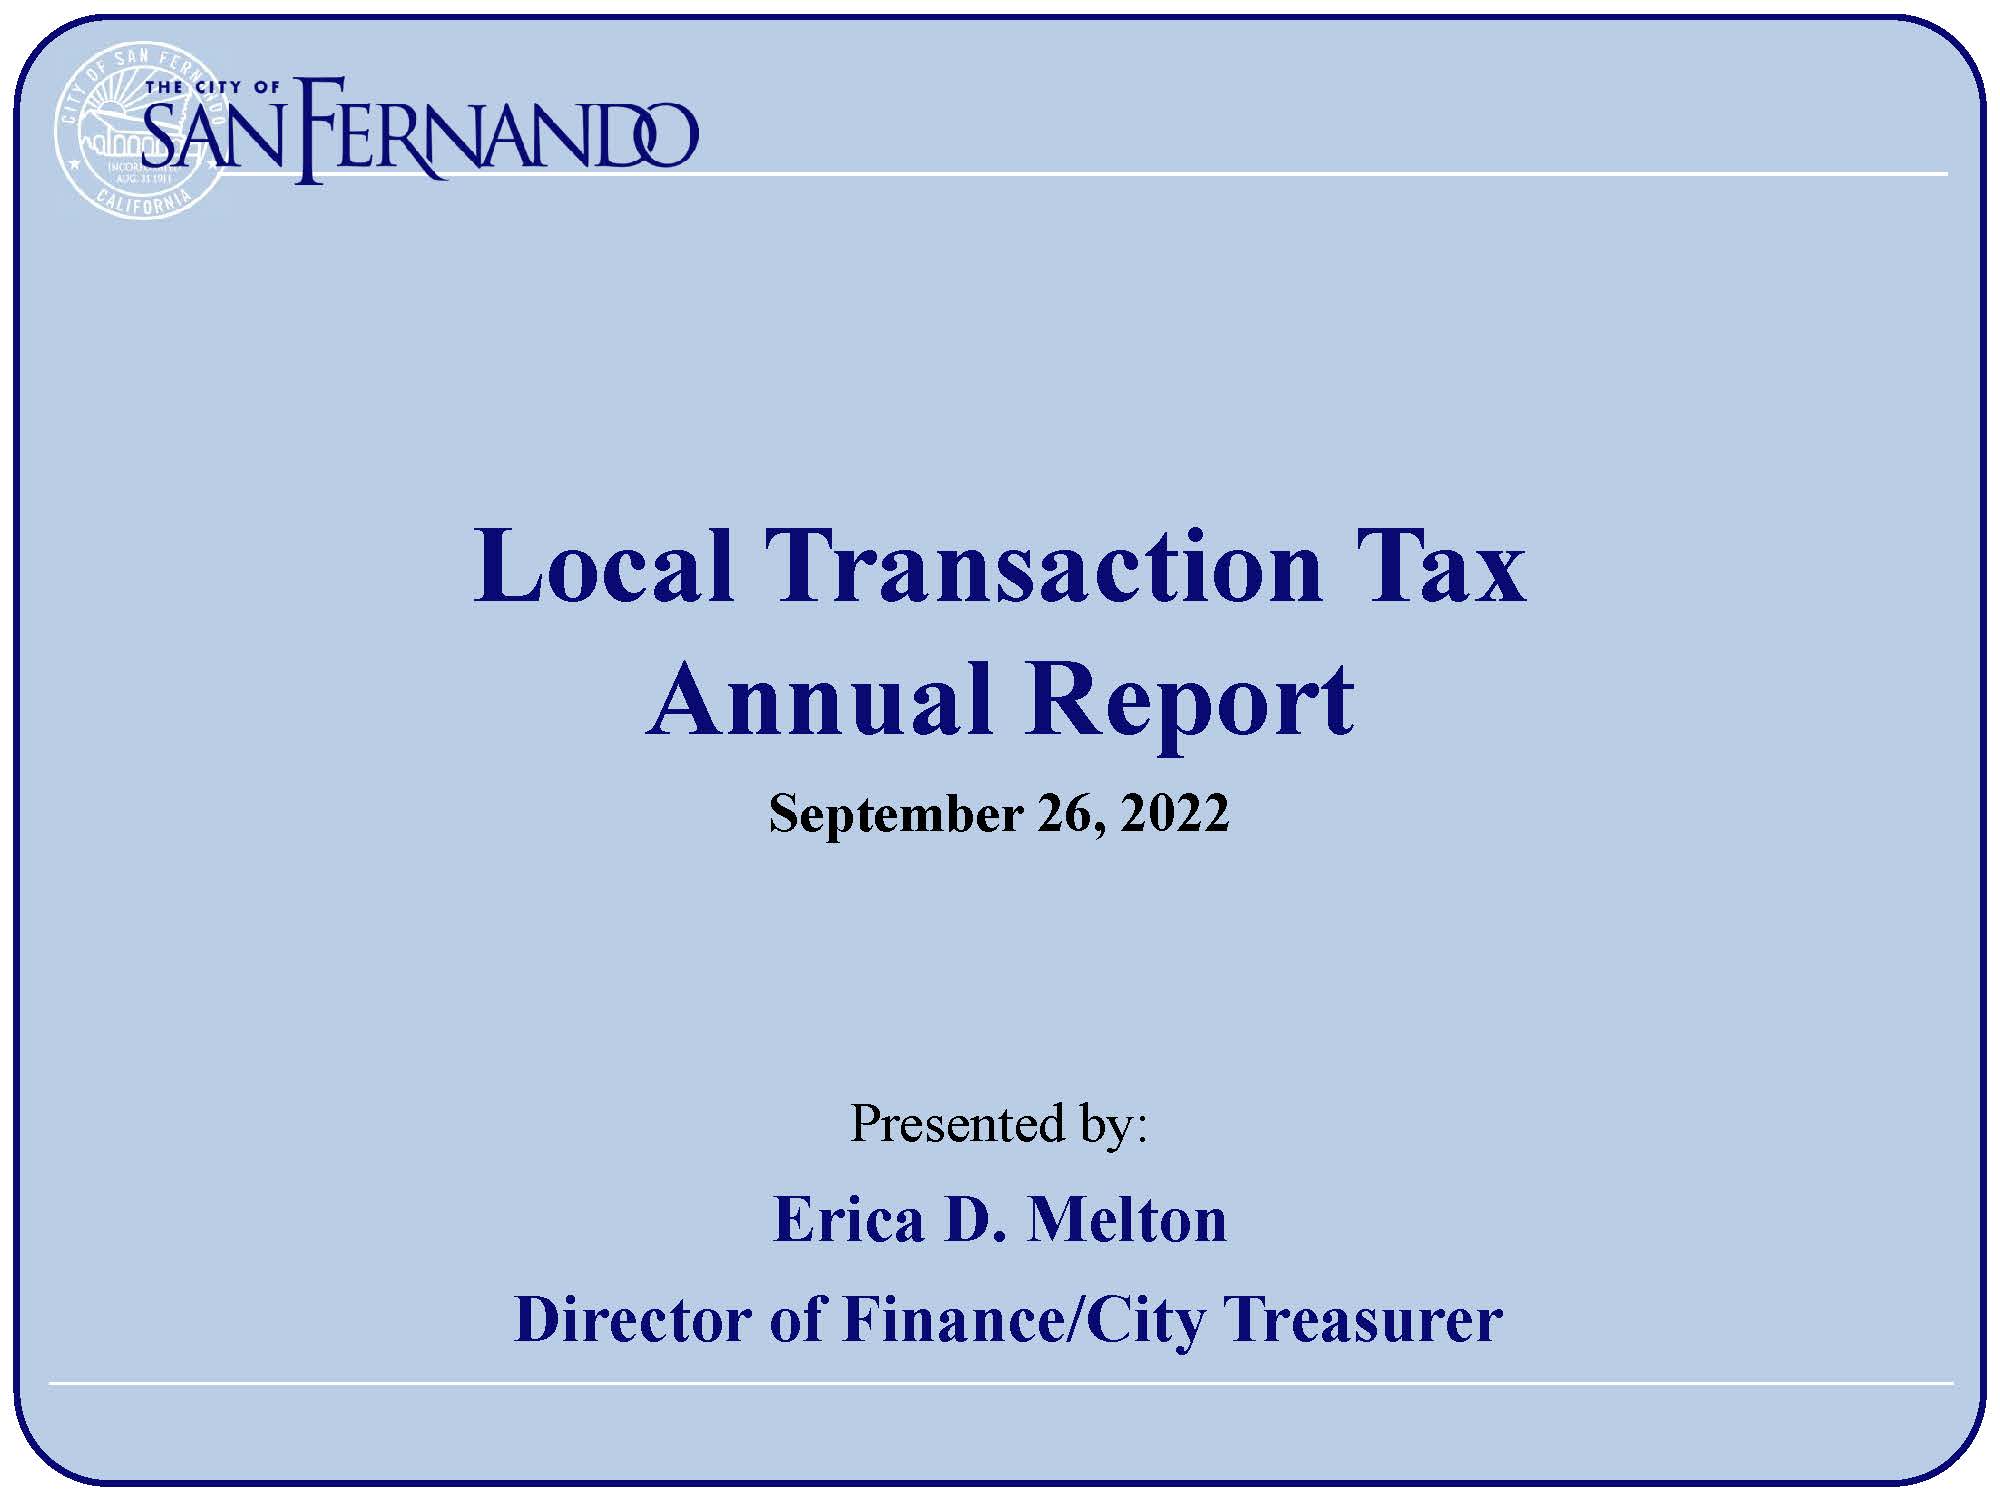 Local Transaction Tax - Town Hall Meeting Presentation (9-26-22)